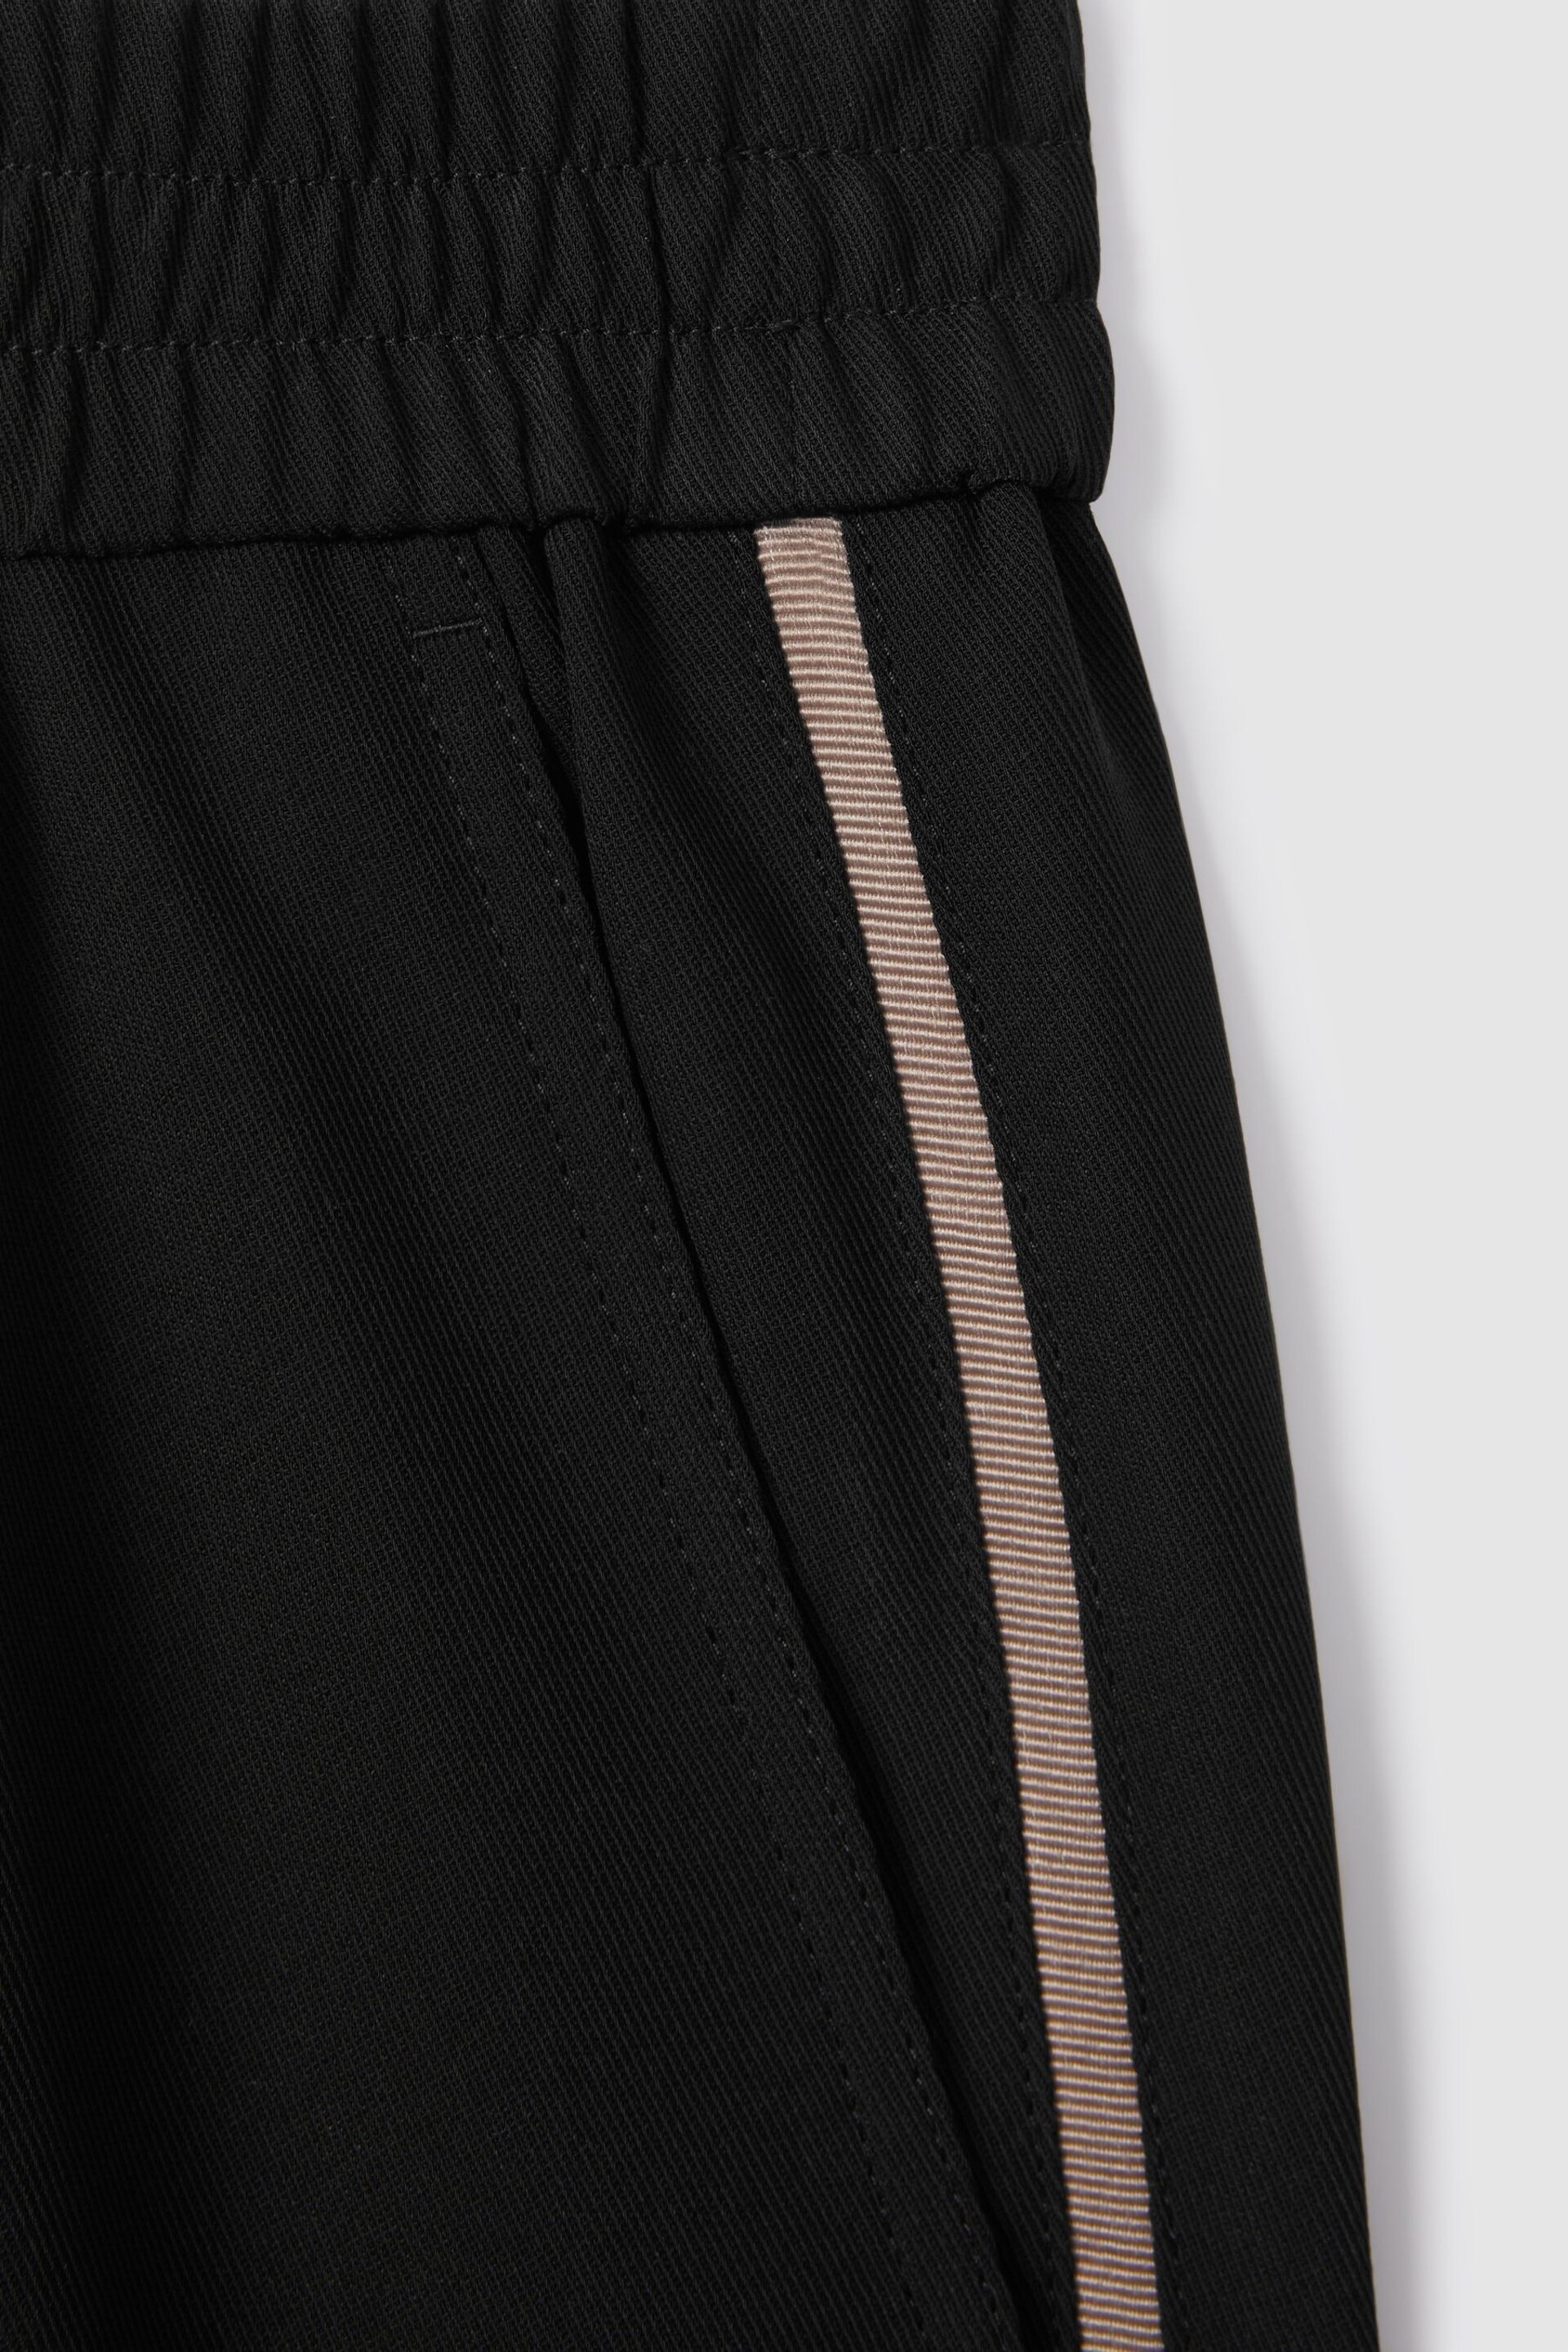 Reiss Black Remi Petite Elasticated Side Stripe Trousers - Image 7 of 8